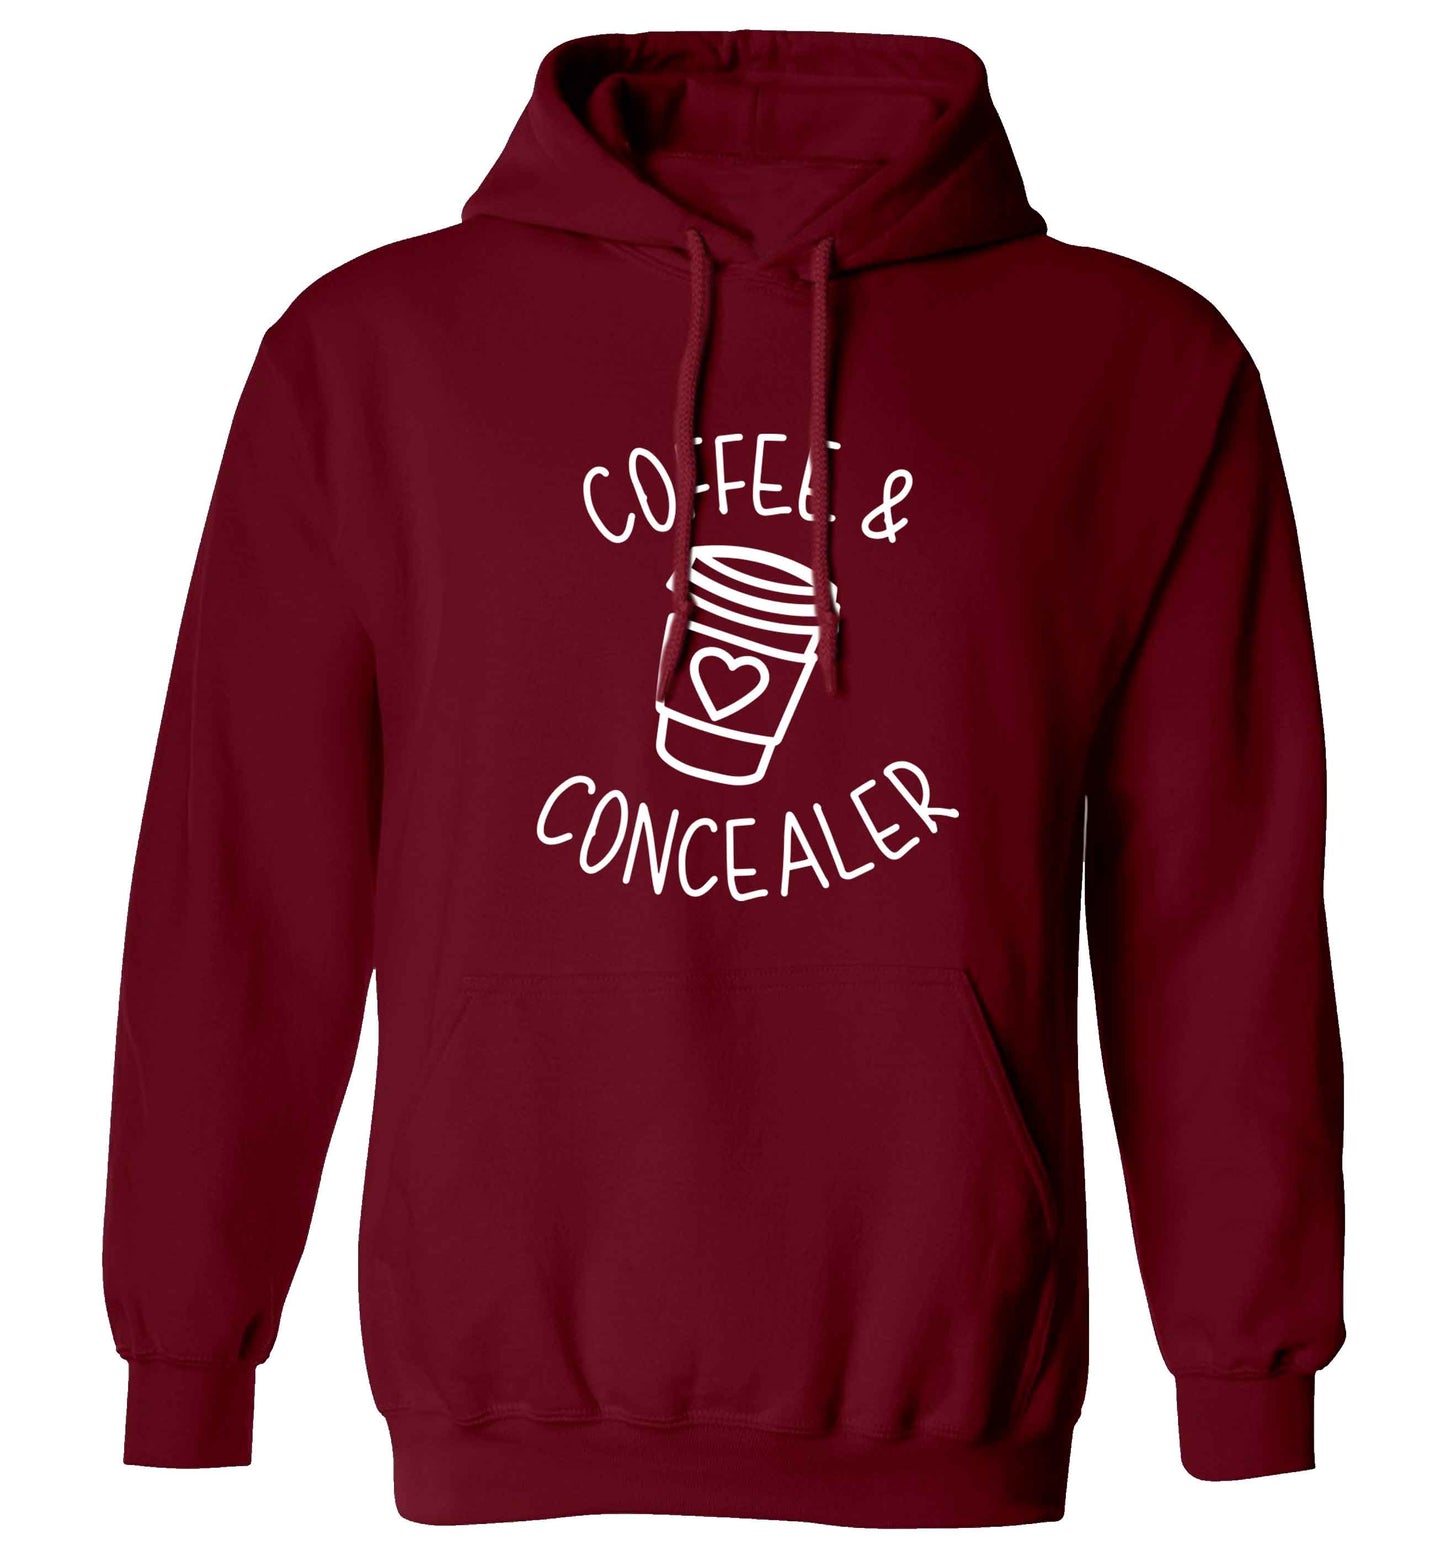 Coffee and concealer adults unisex maroon hoodie 2XL